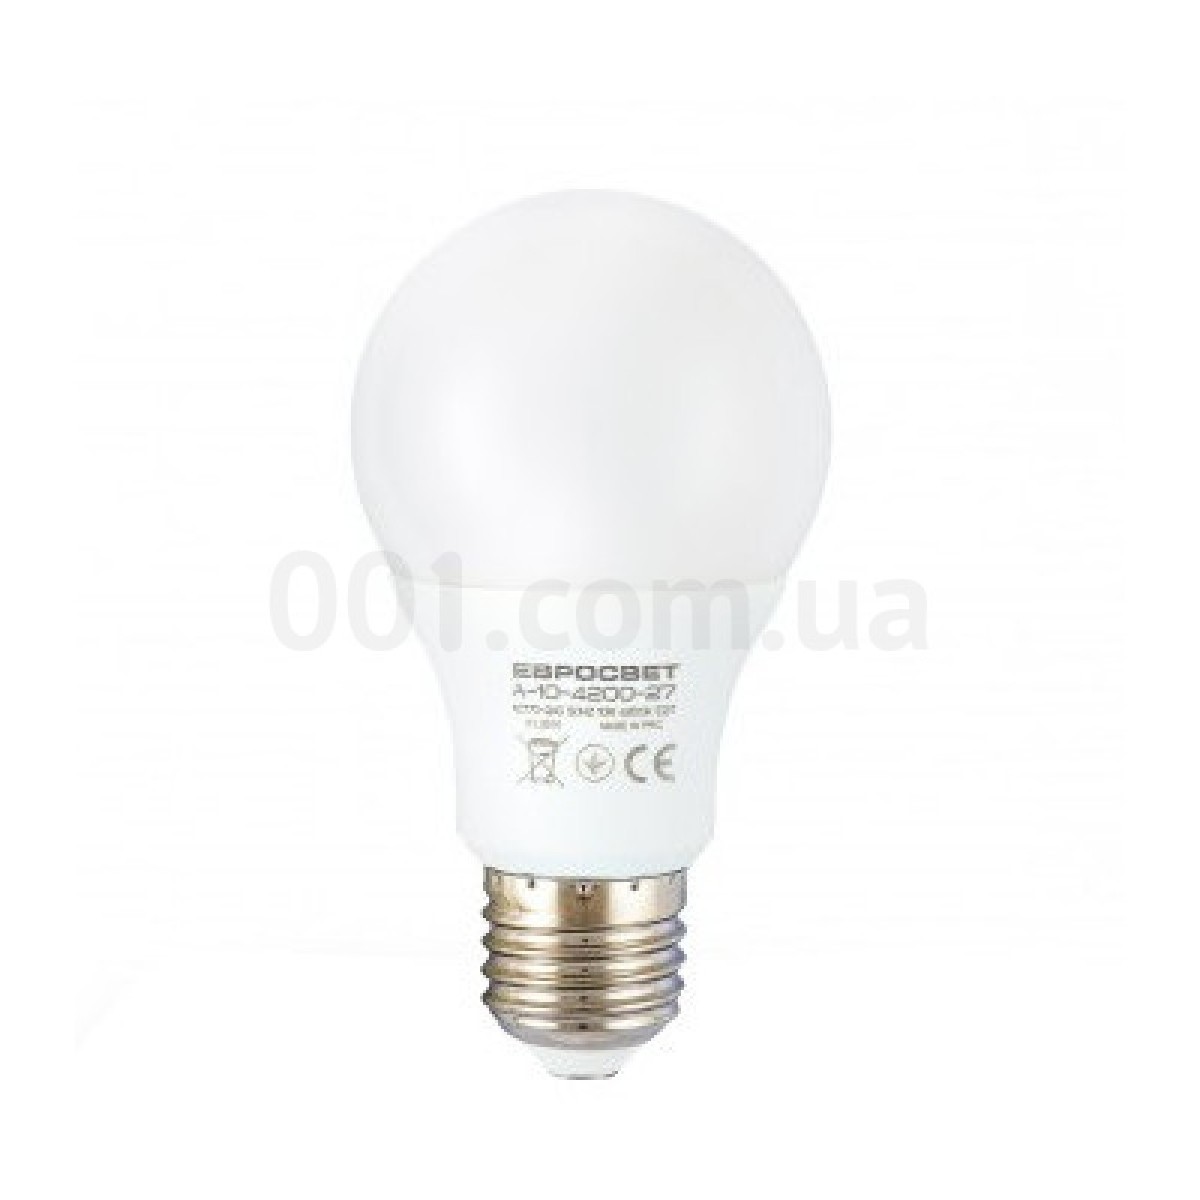 Світлодіодна (LED) лампа A-10-4200-27, 10 Вт 4200K E27, Евросвет 256_256.jpg